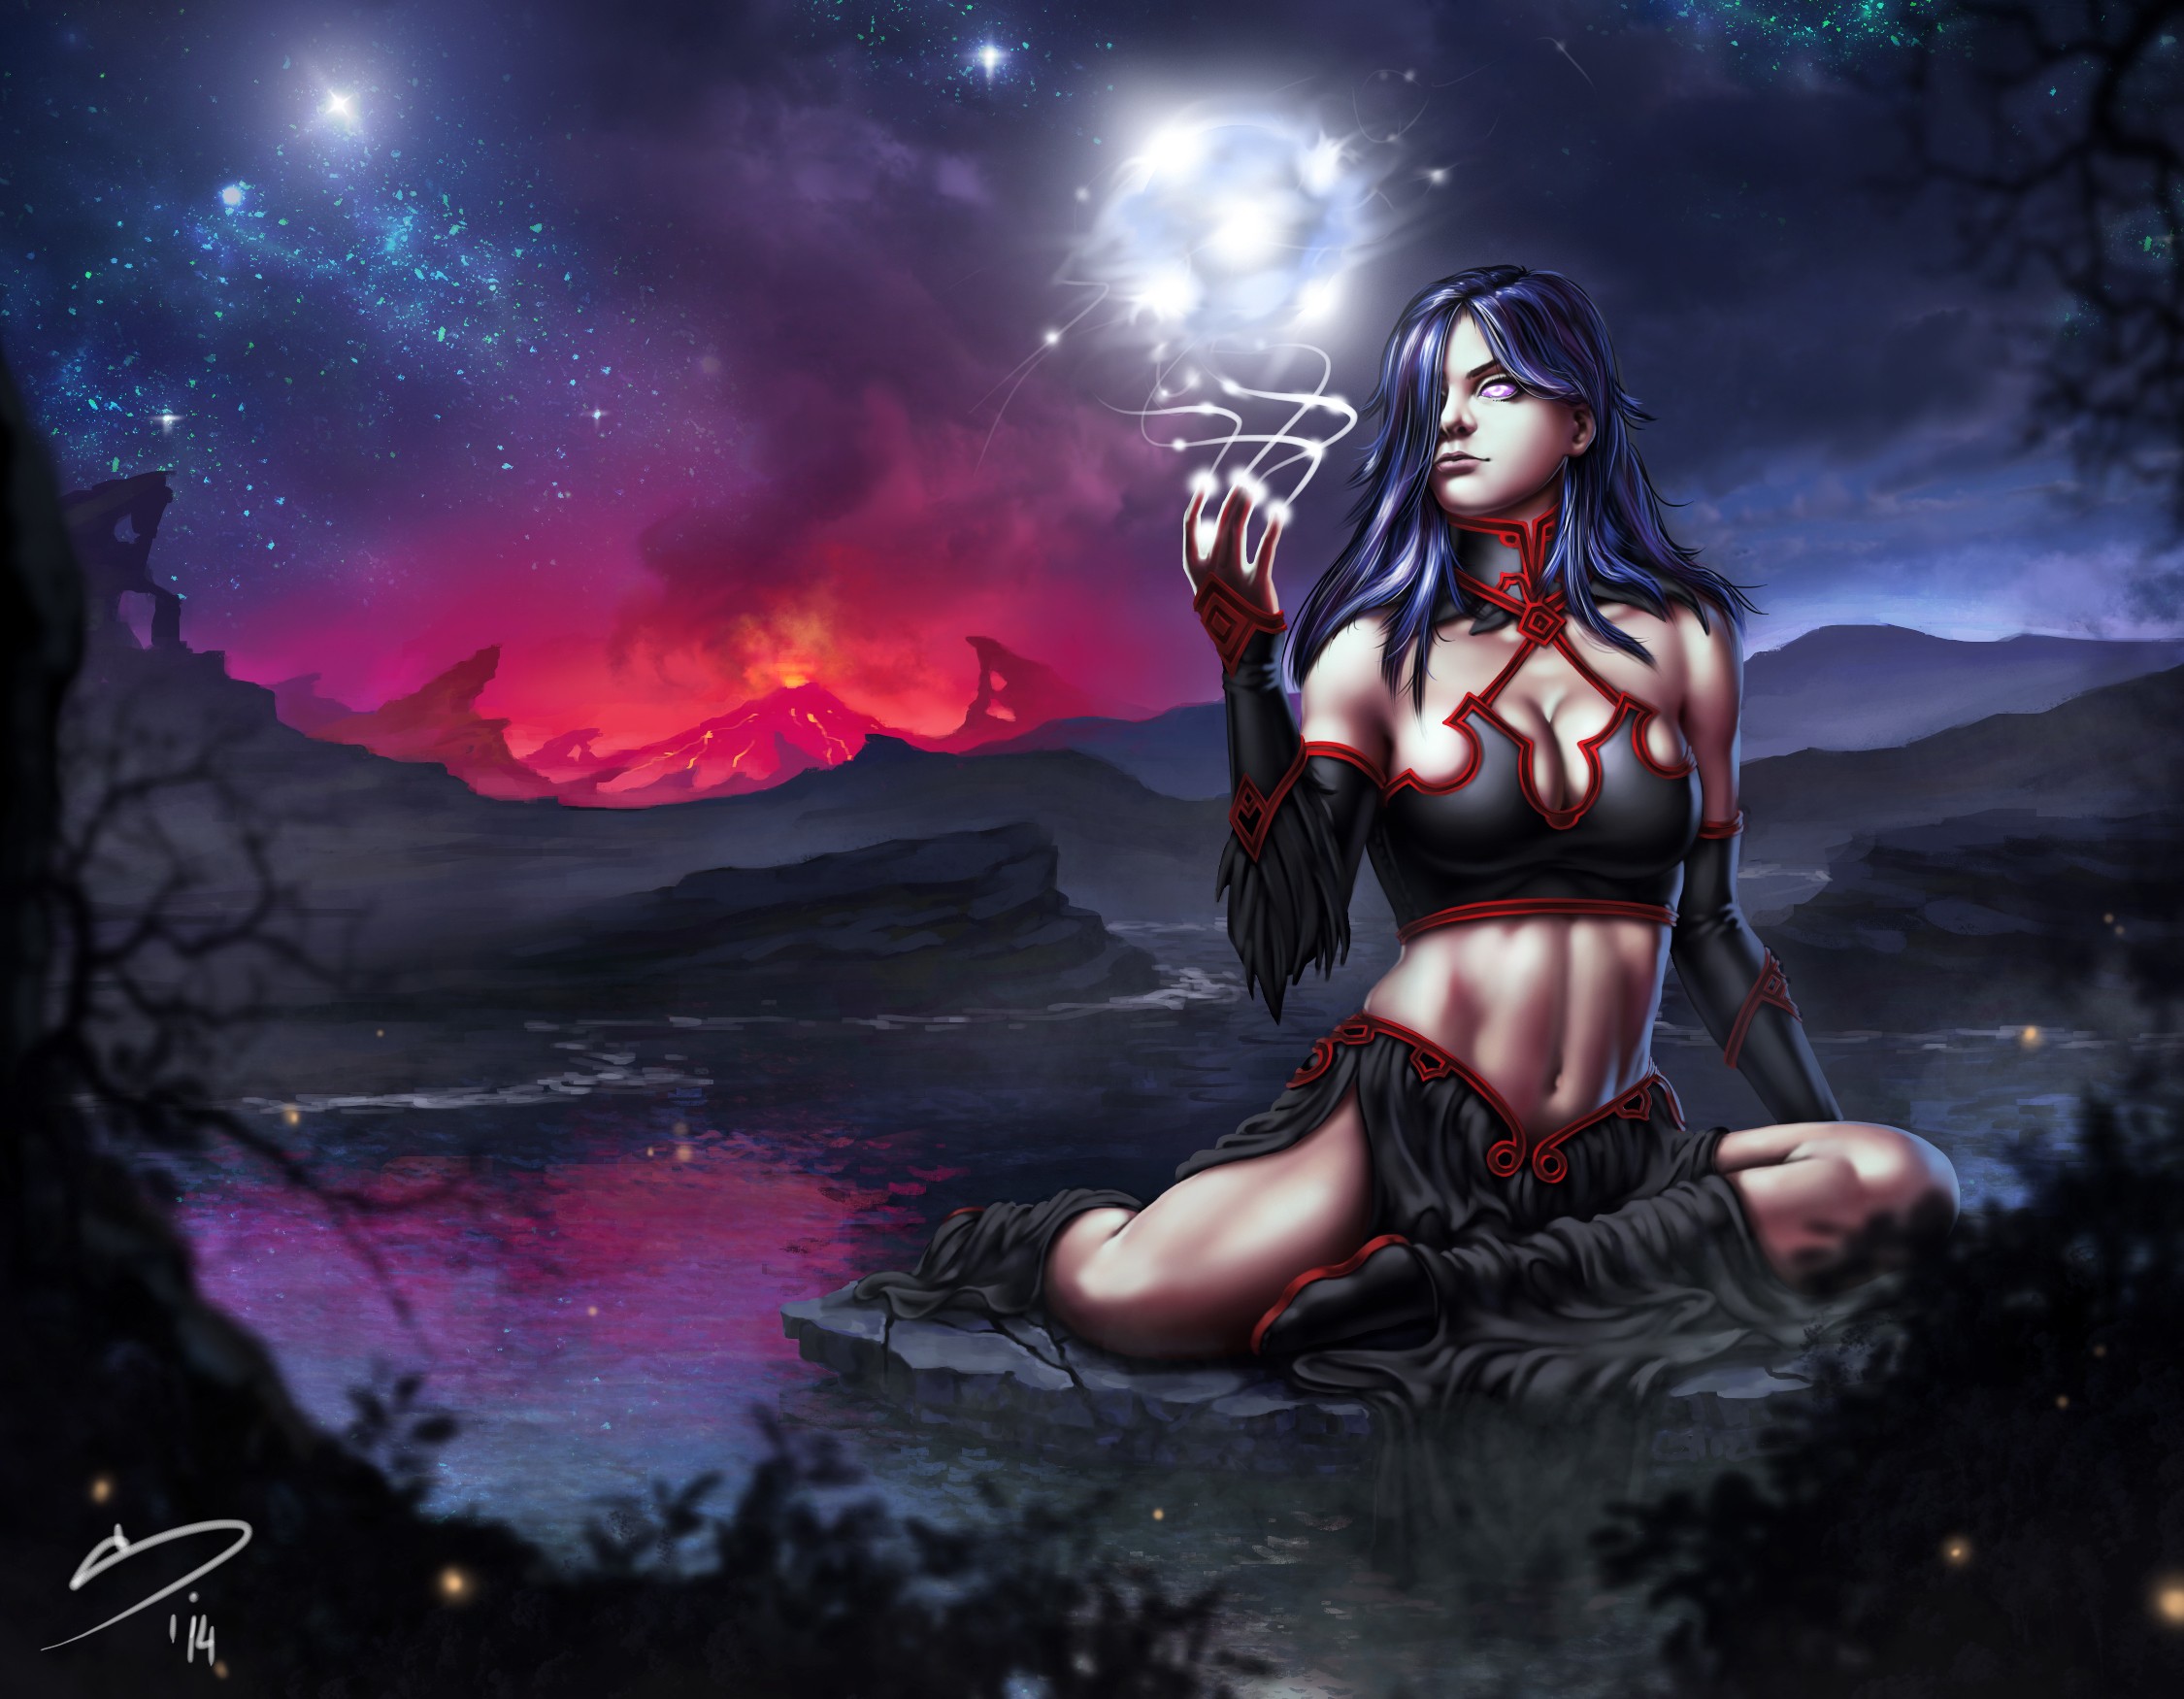 General 2250x1750 video games fan art artwork Diablo women belly 2014 (Year) PC gaming video game girls